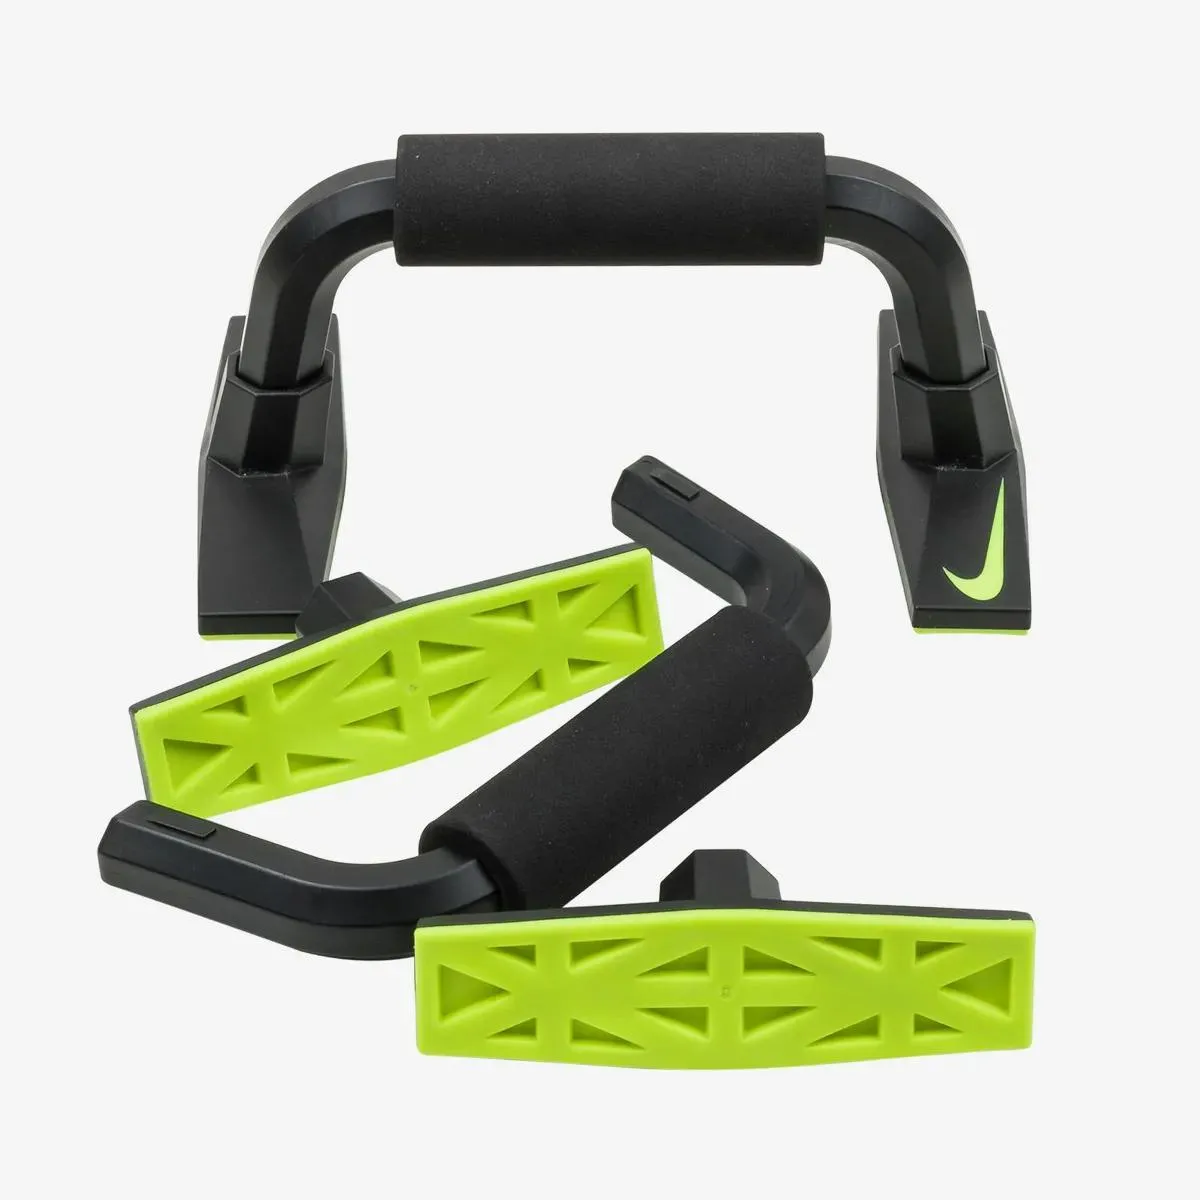 Jr Nike Fitness oprema PUSH UP GRIP 3.0 BLACK/VOLT 